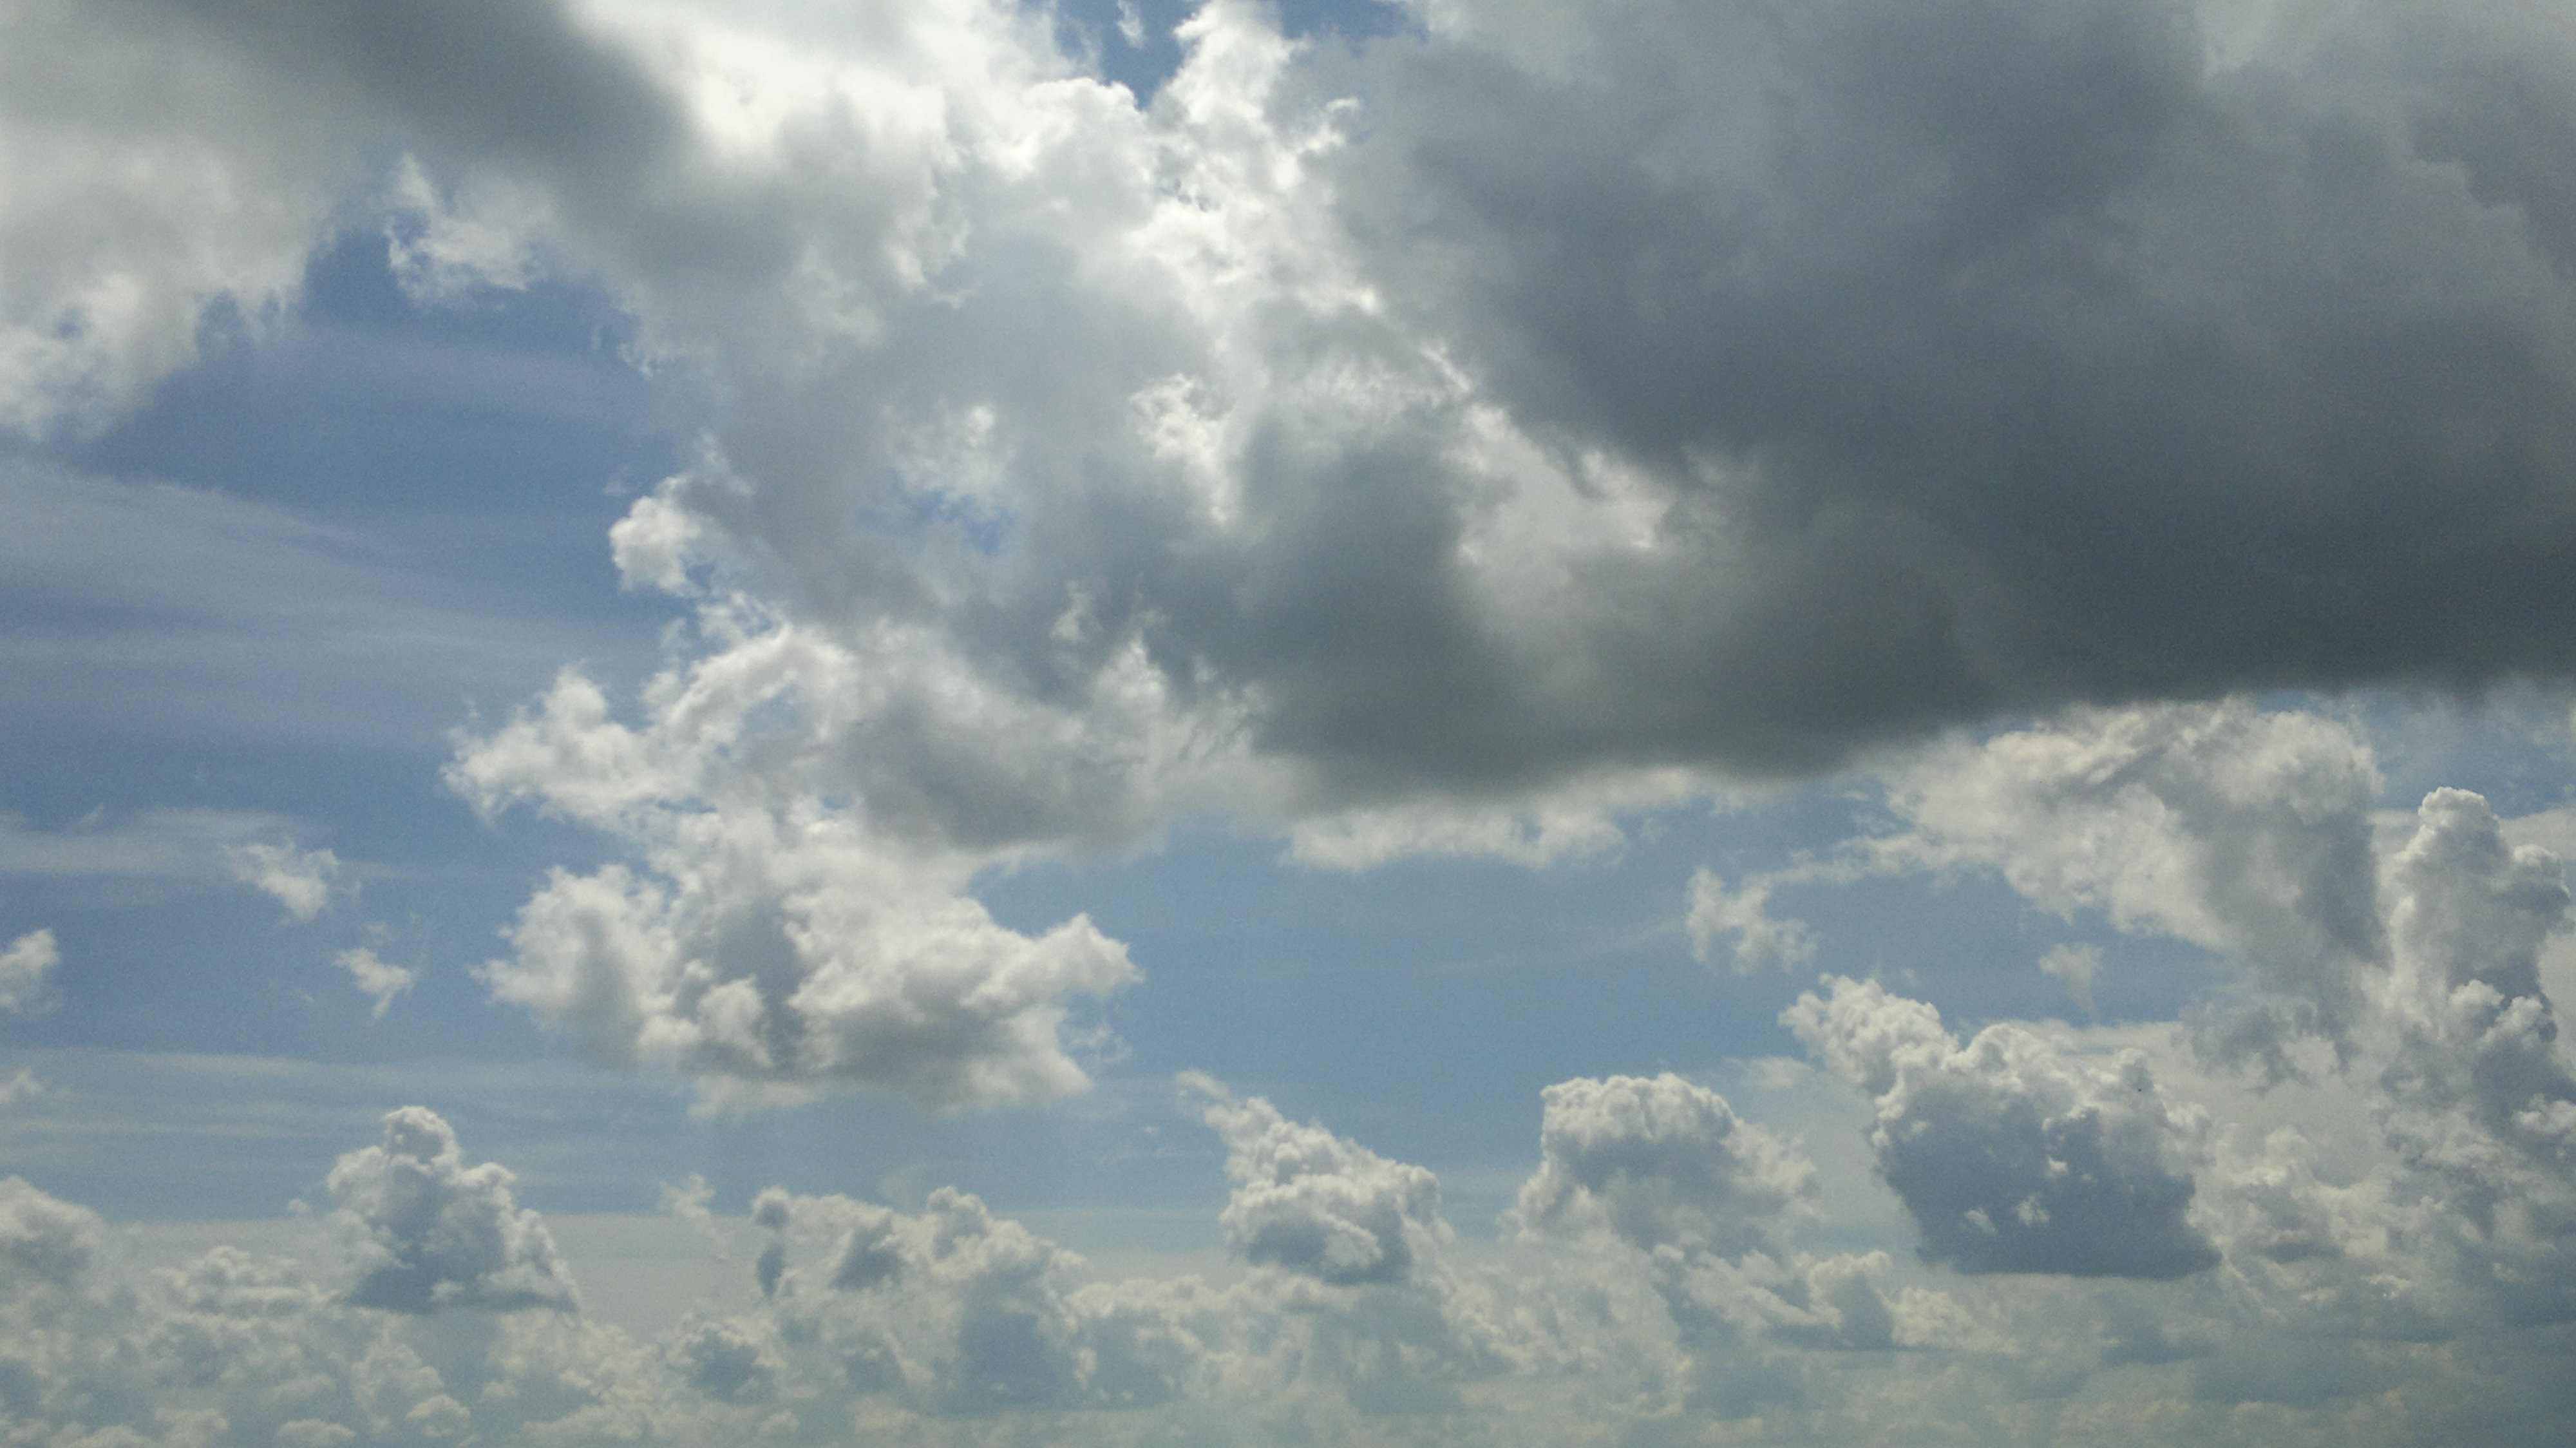 File:Cloudy sky over Bergamo.jpg - Wikimedia Commons